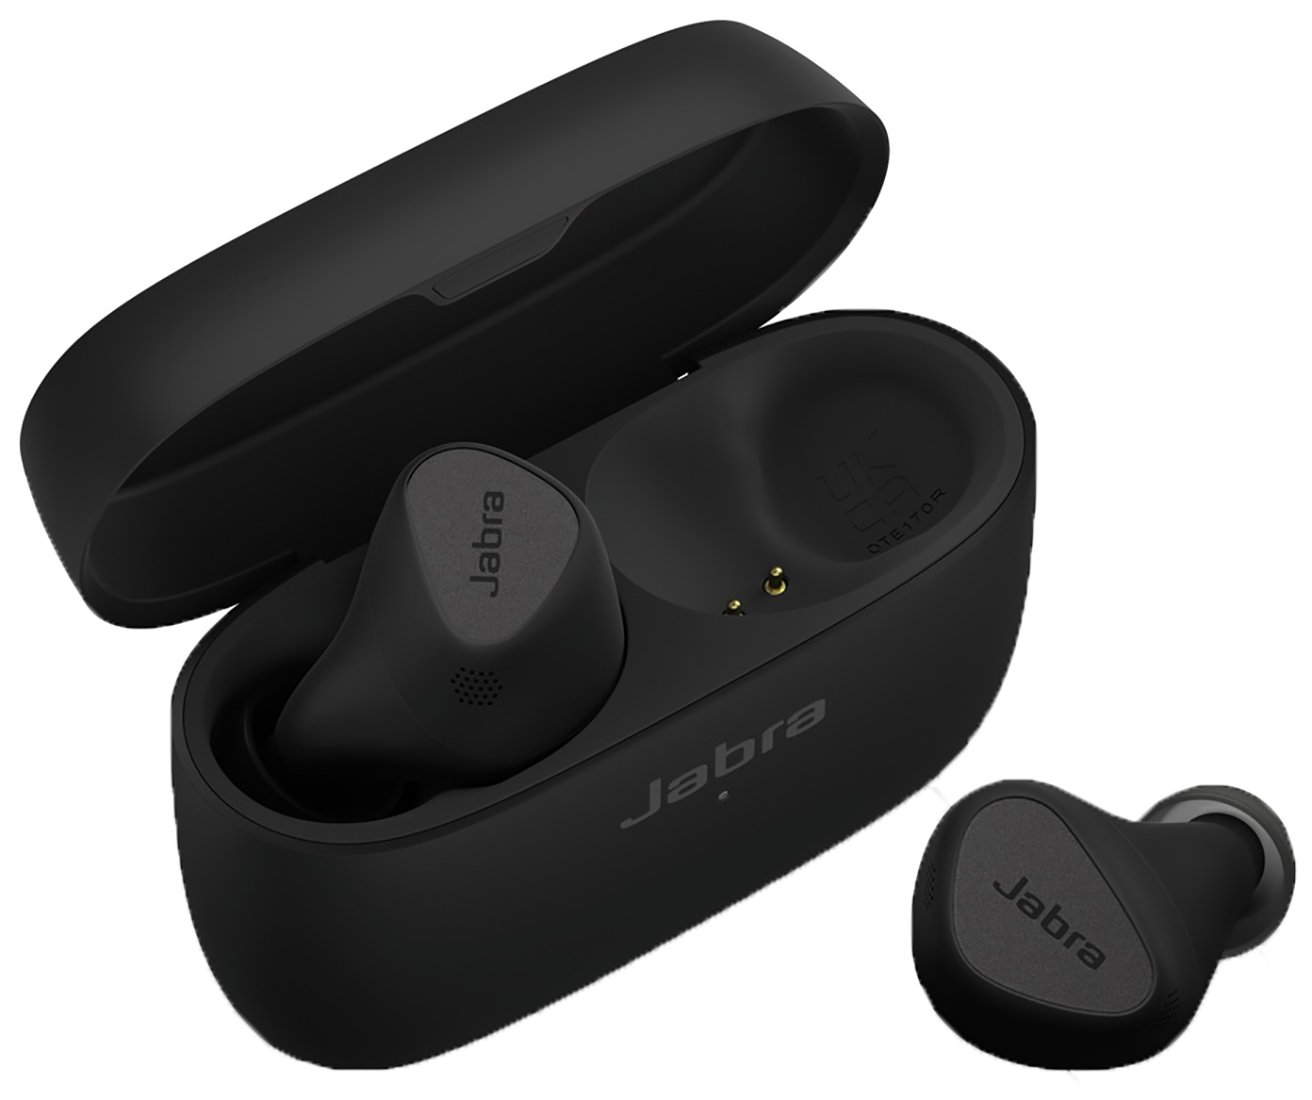 Jabra Elite 5 True Wireless ANC Earbuds - Titanium Black